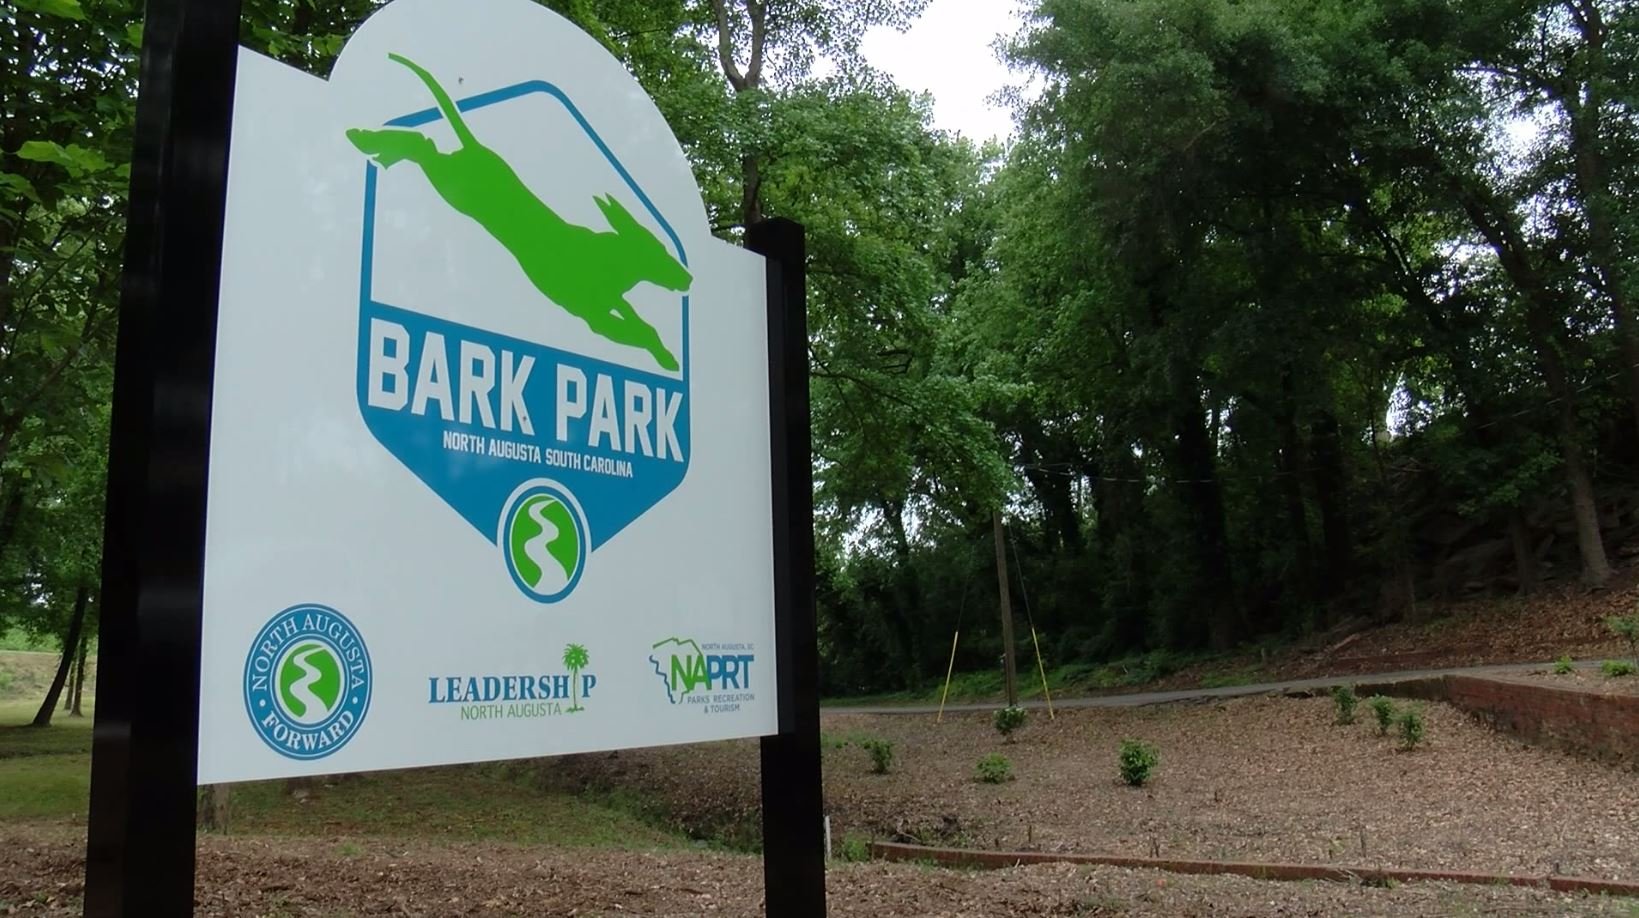 'Bark Park' set to open along North Augusta Greenway WSMV News 4